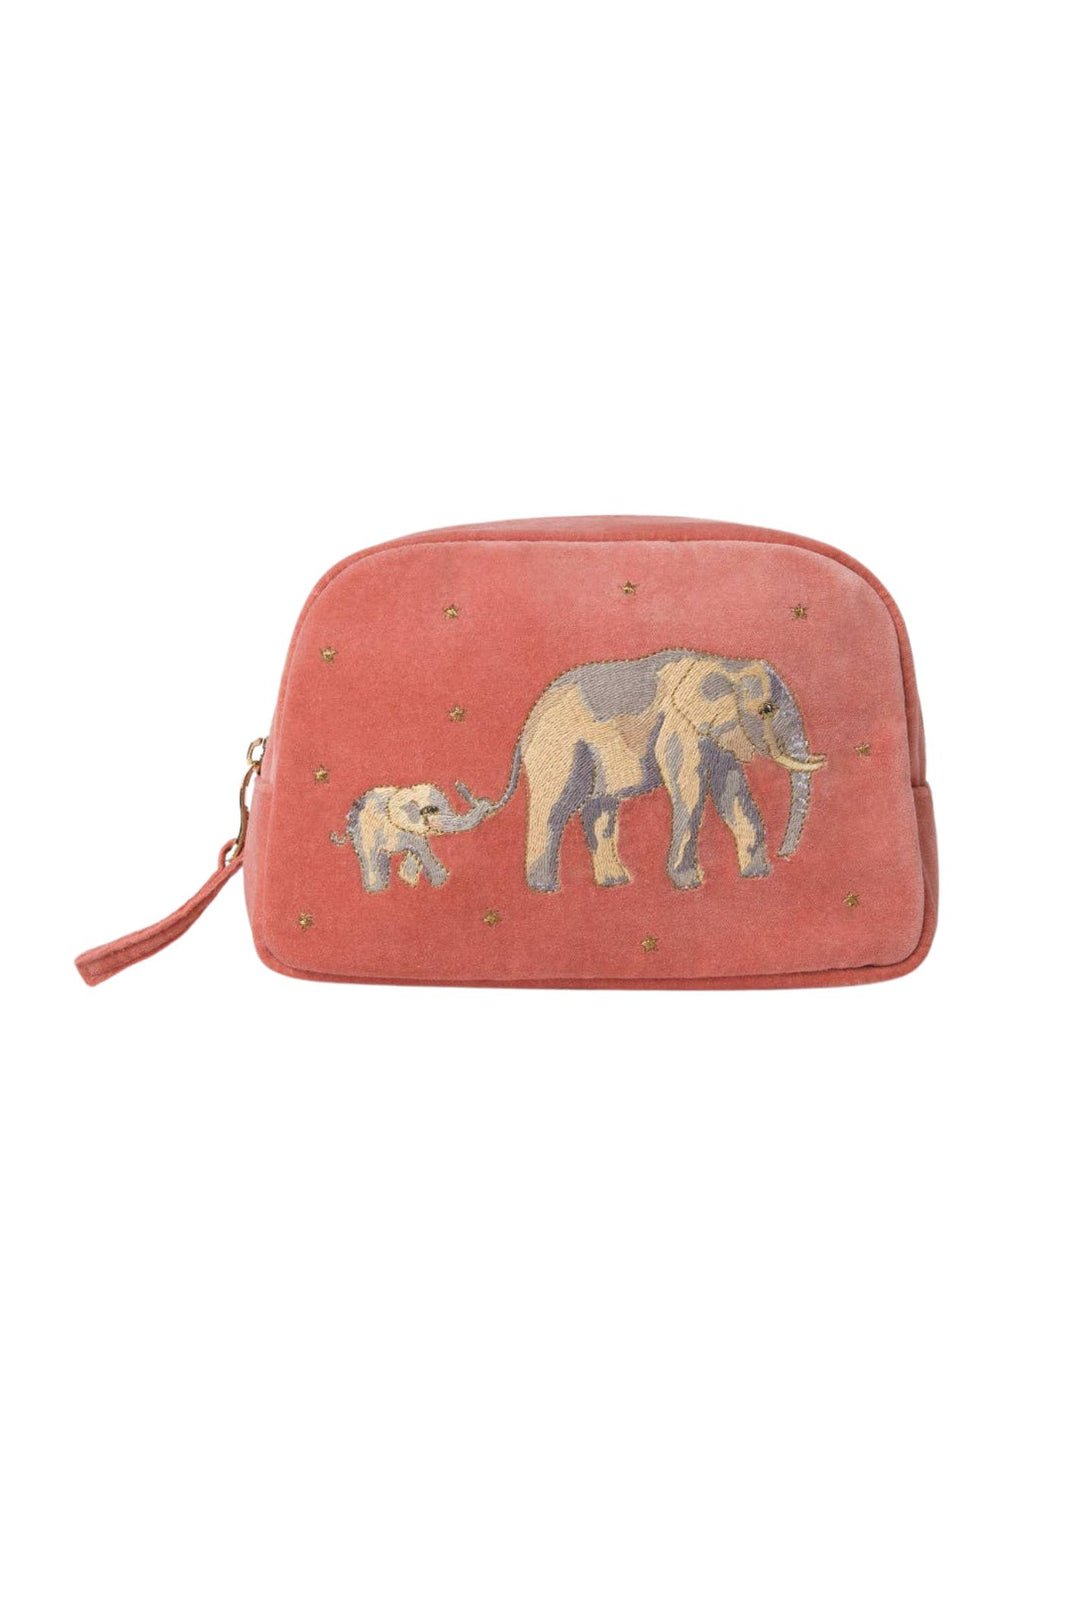 Elizabeth Scarlett Peach Elephant Conservation Cosmetics Bag